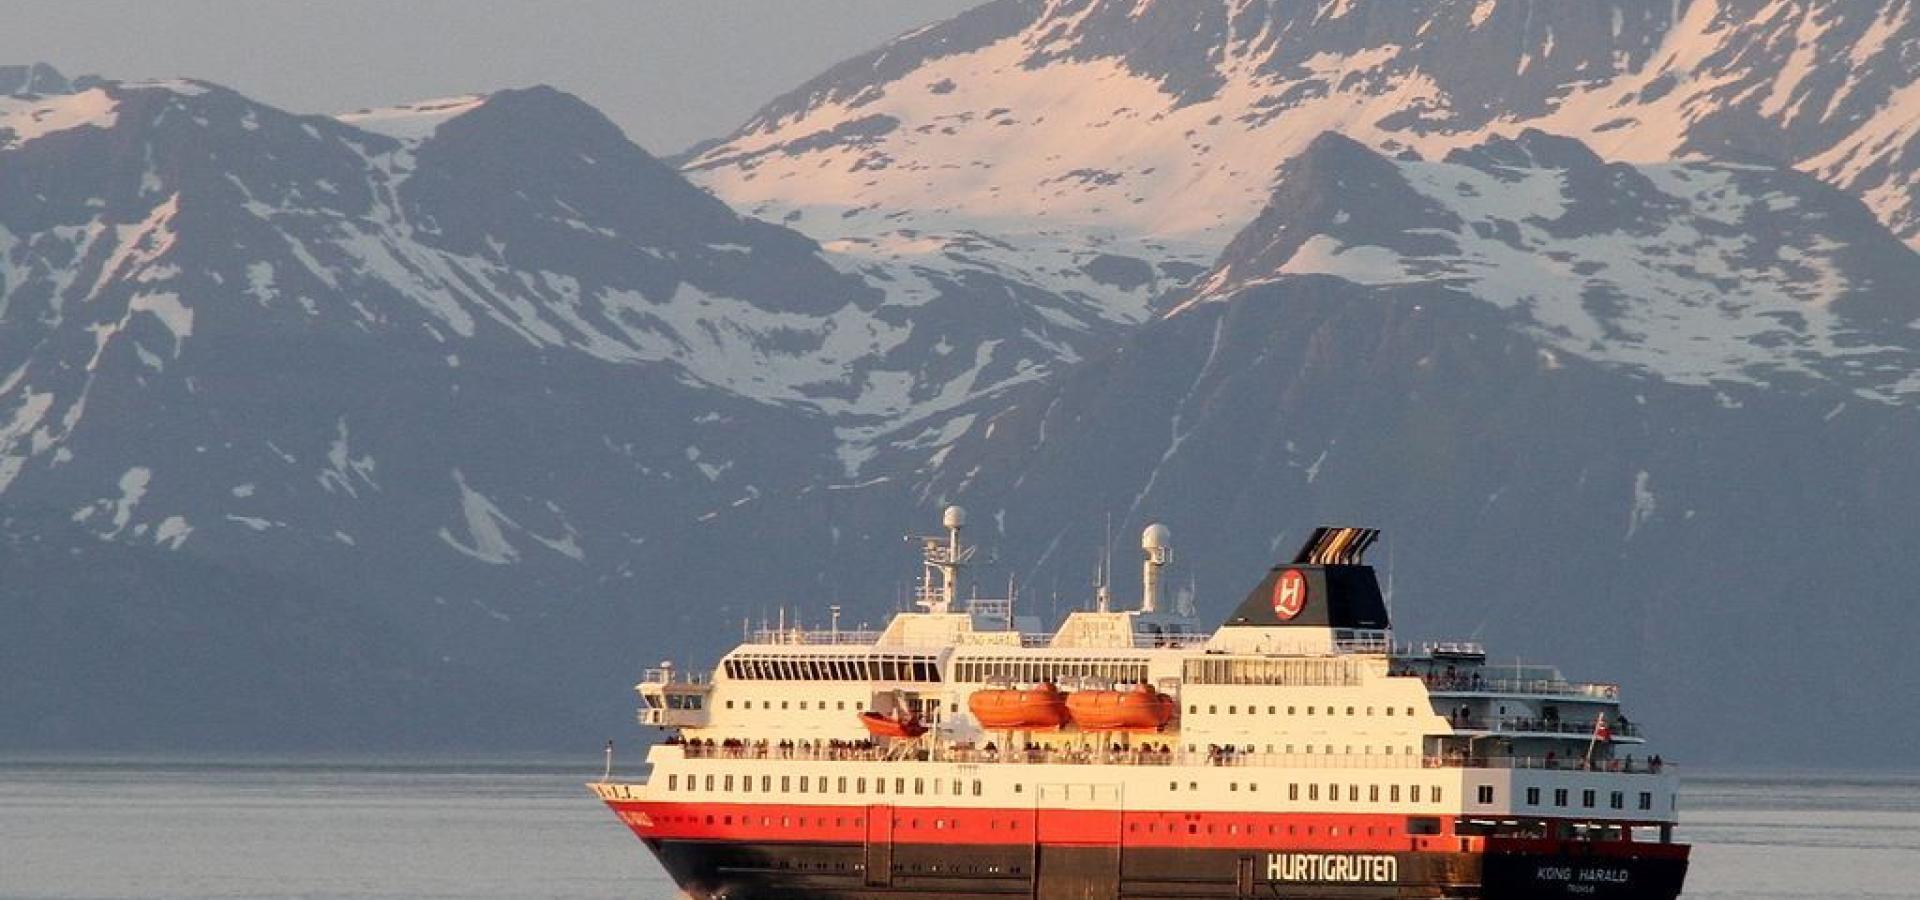 Explore the Arctic – Reisa National Park and Hurtigruten